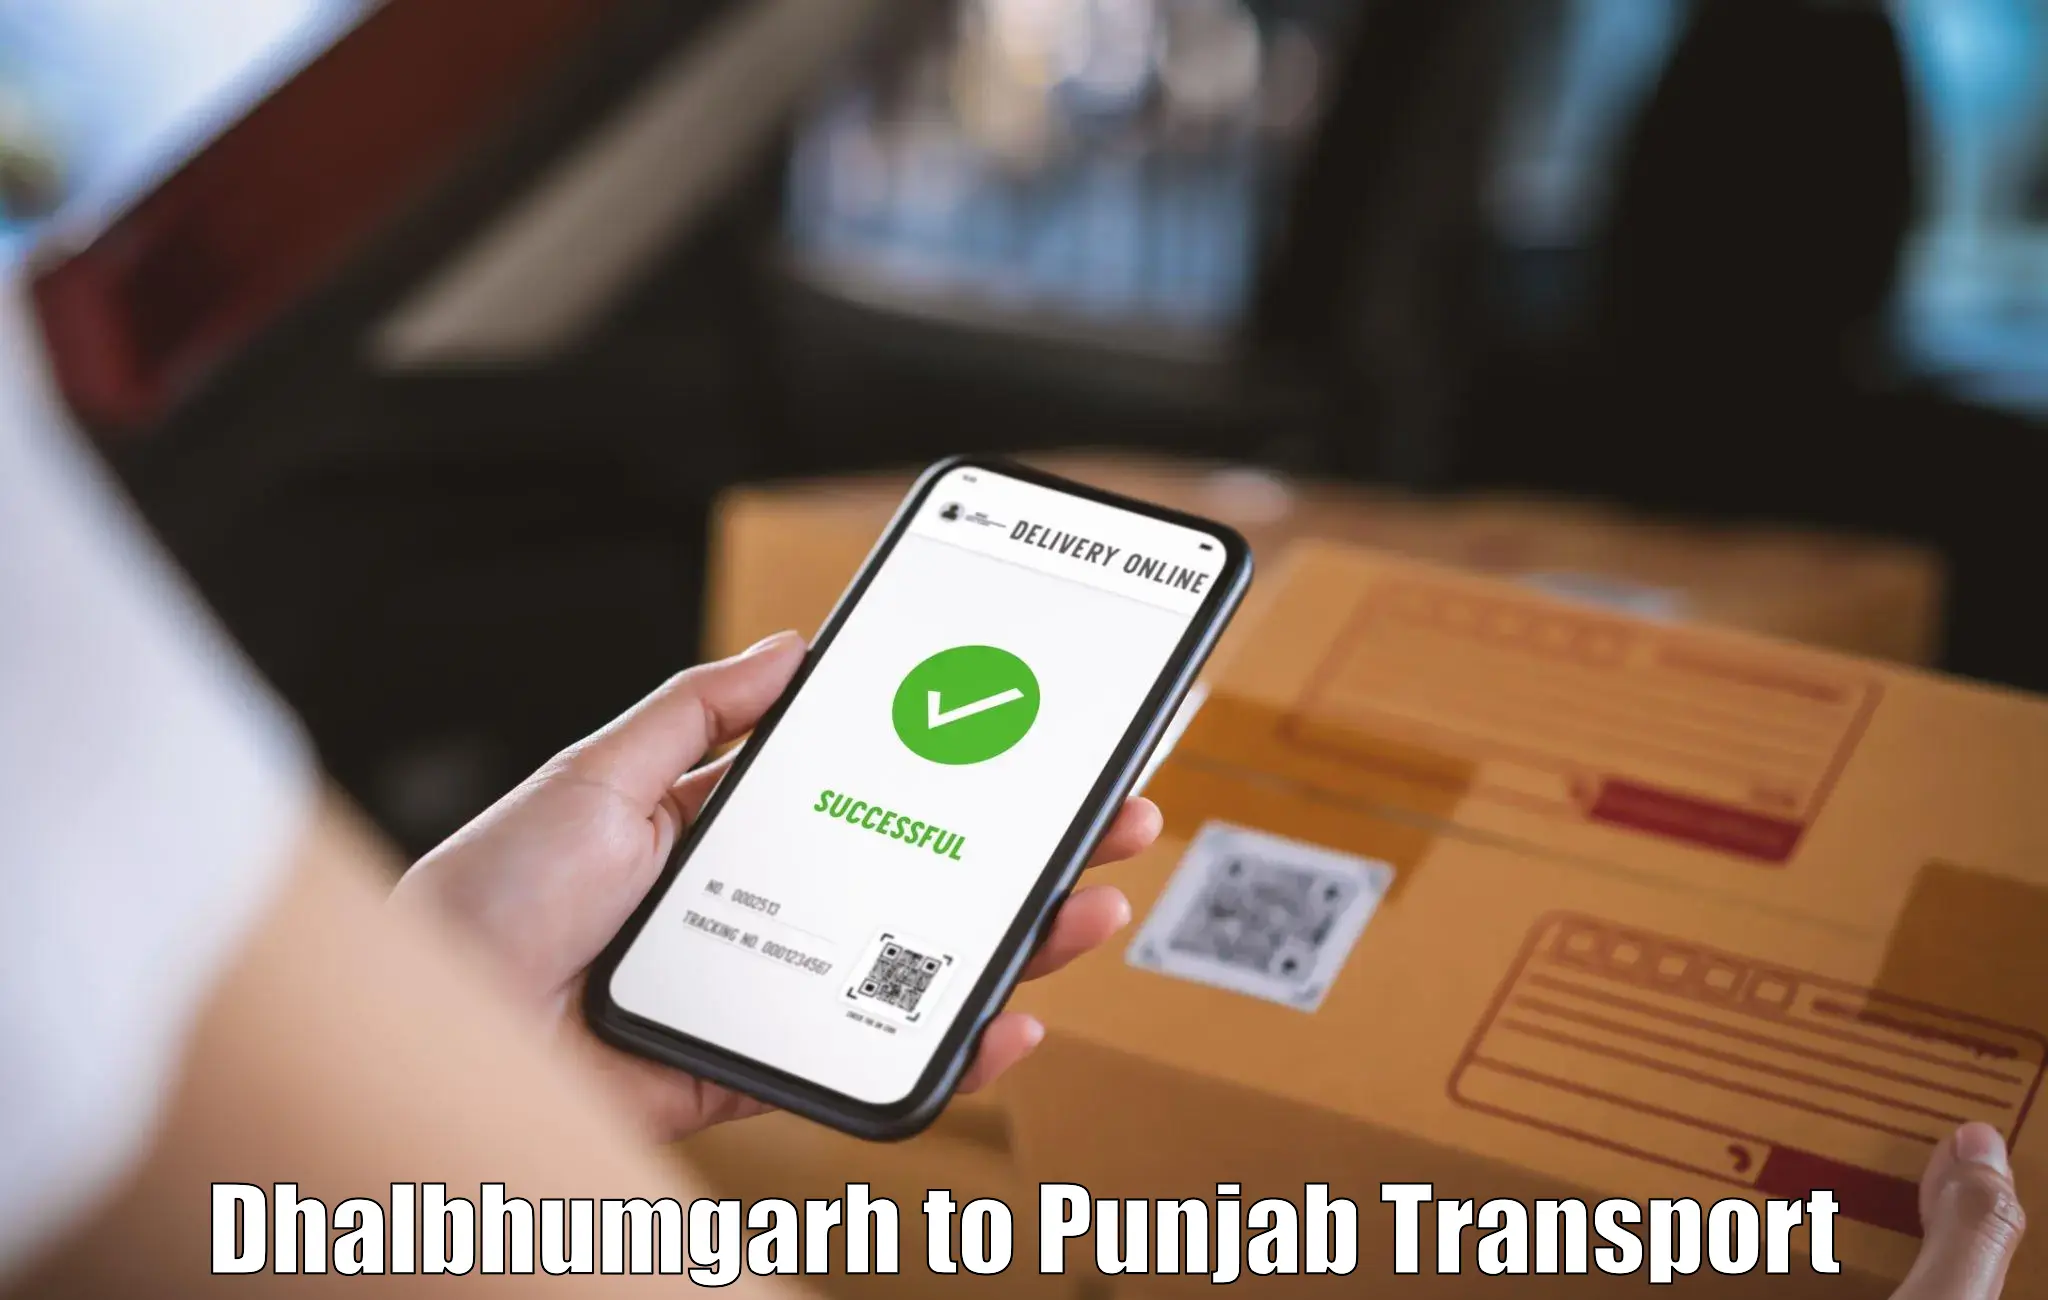 Bike shifting service Dhalbhumgarh to Punjab